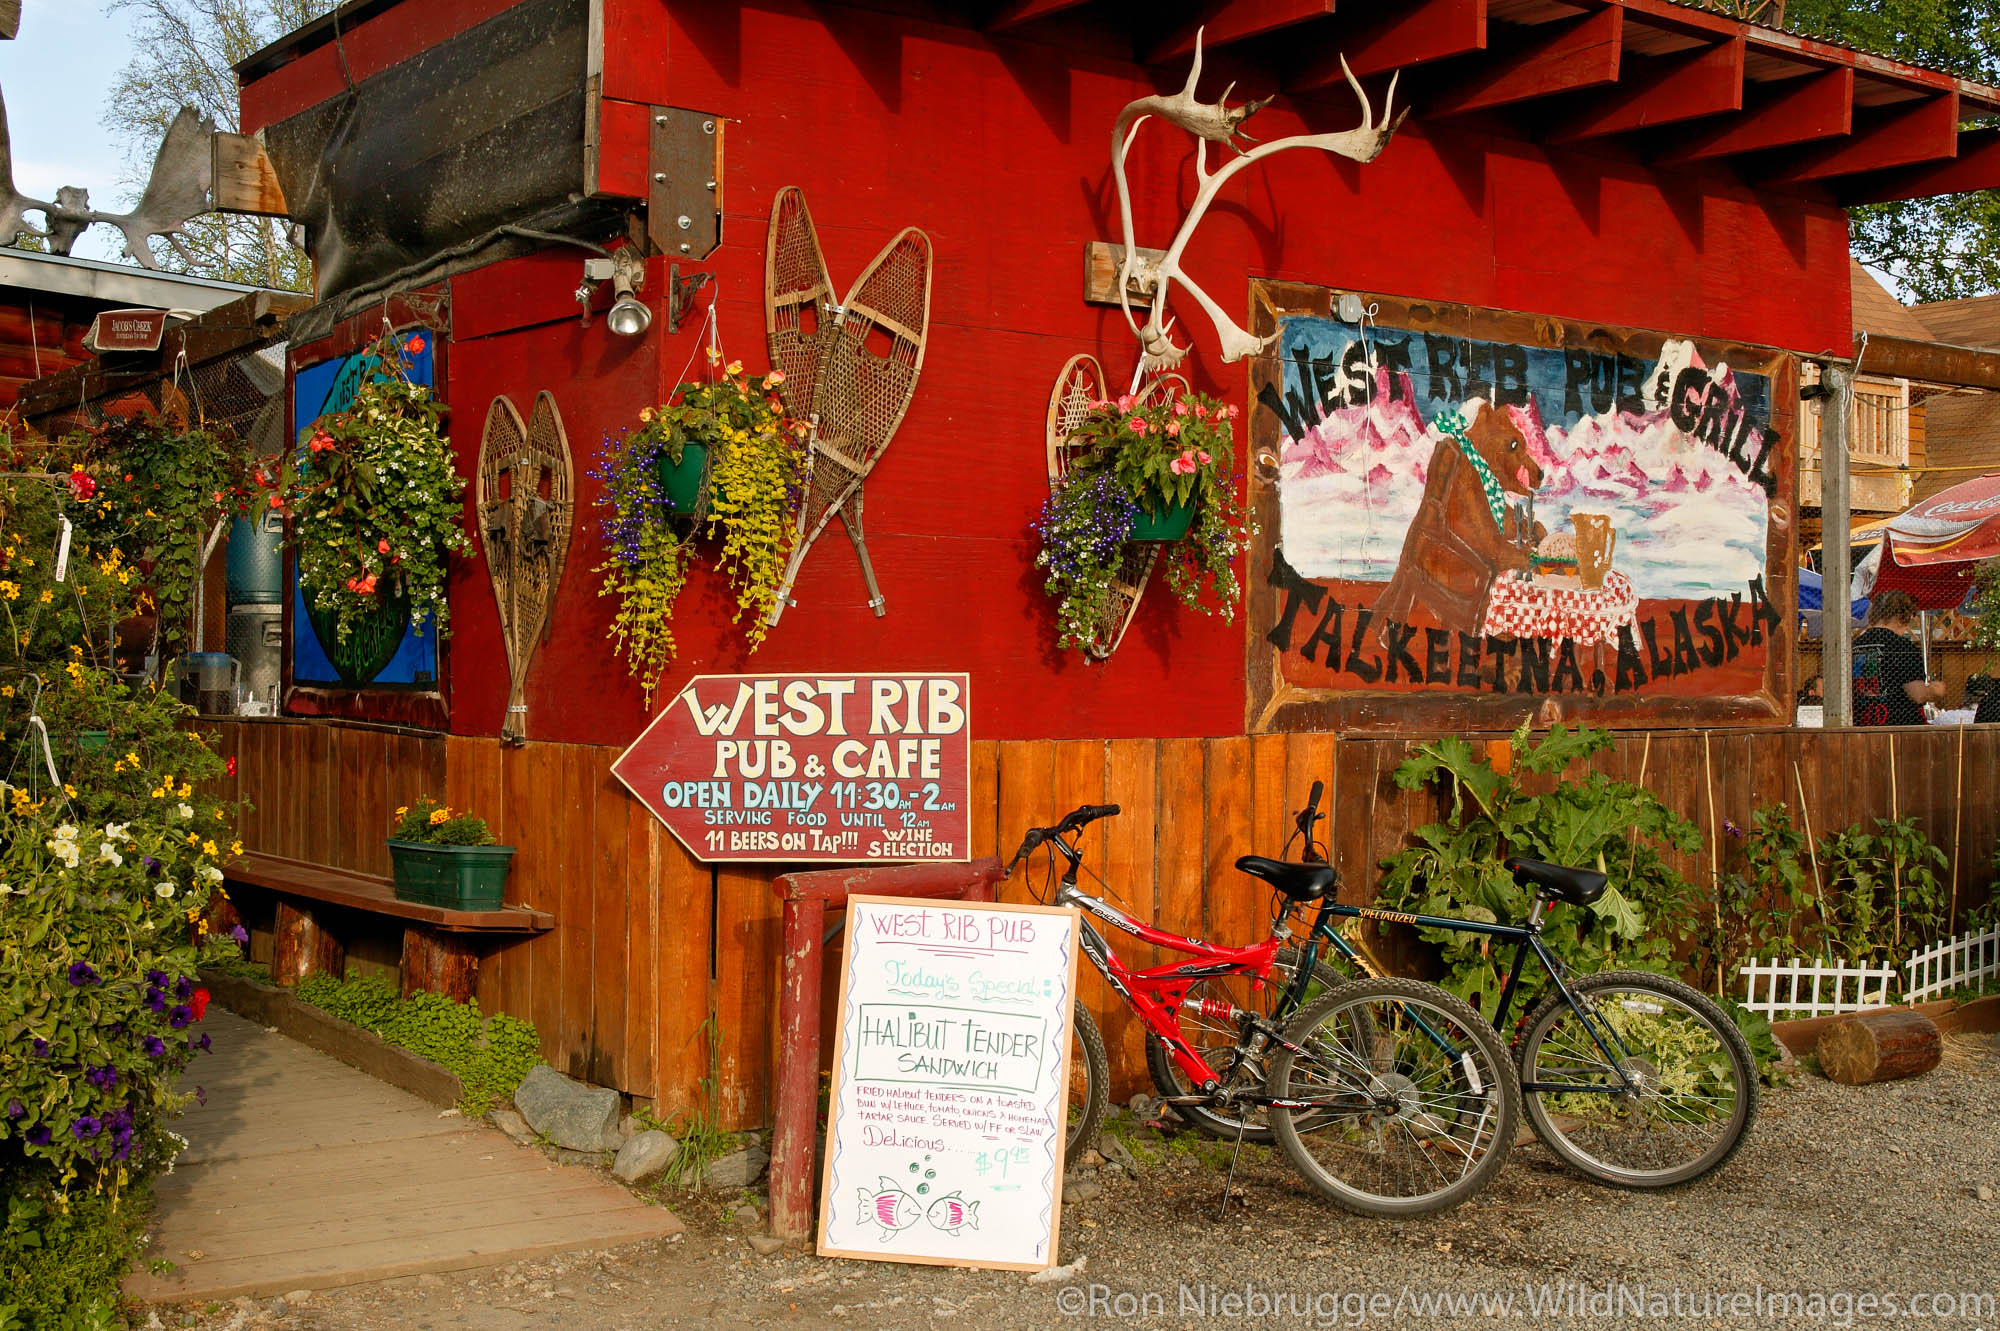 The West Rib Pub and Cafe, Talkeetna, Alaska.